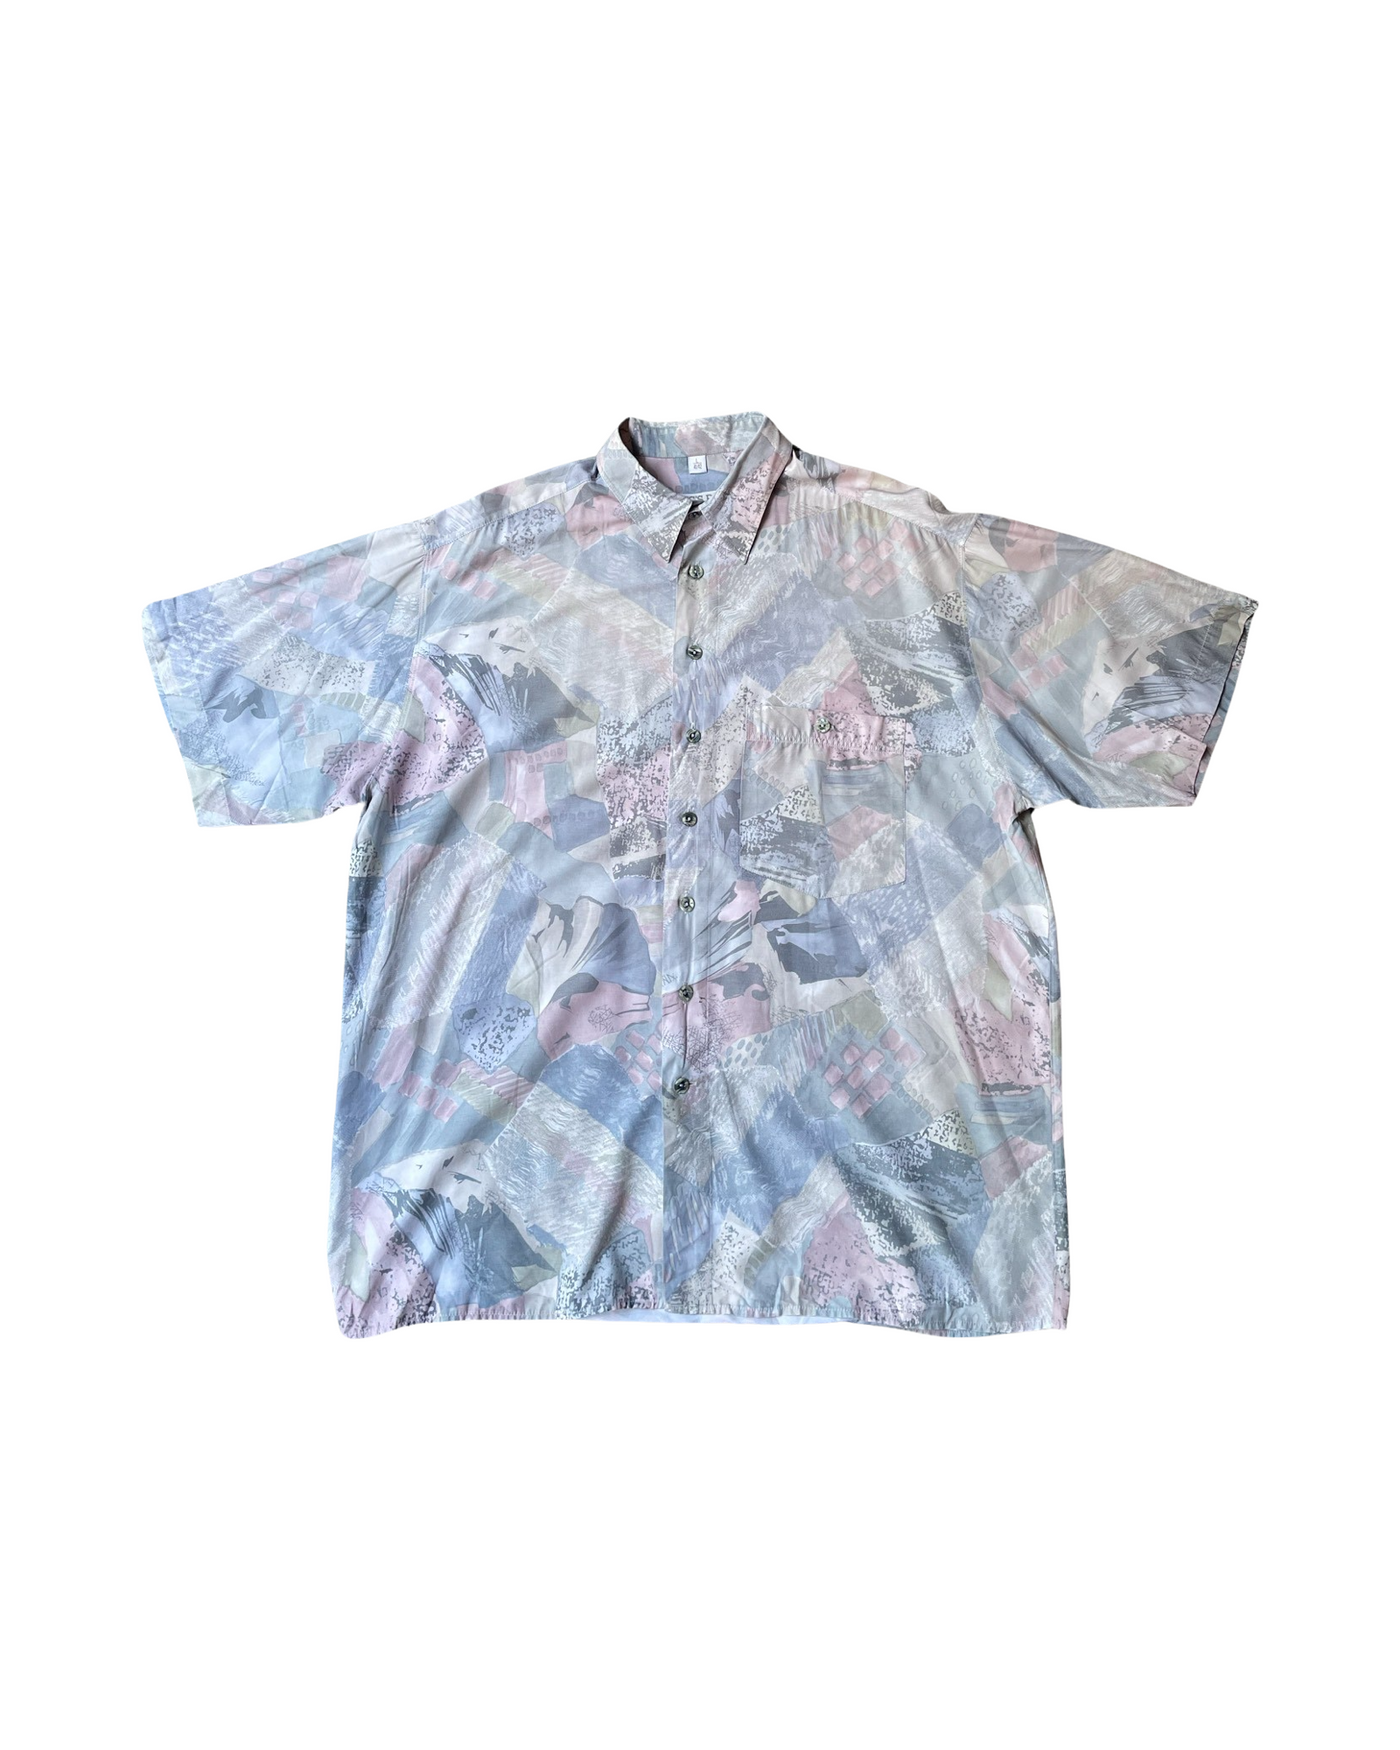 Vintage 90’s Party Shirt